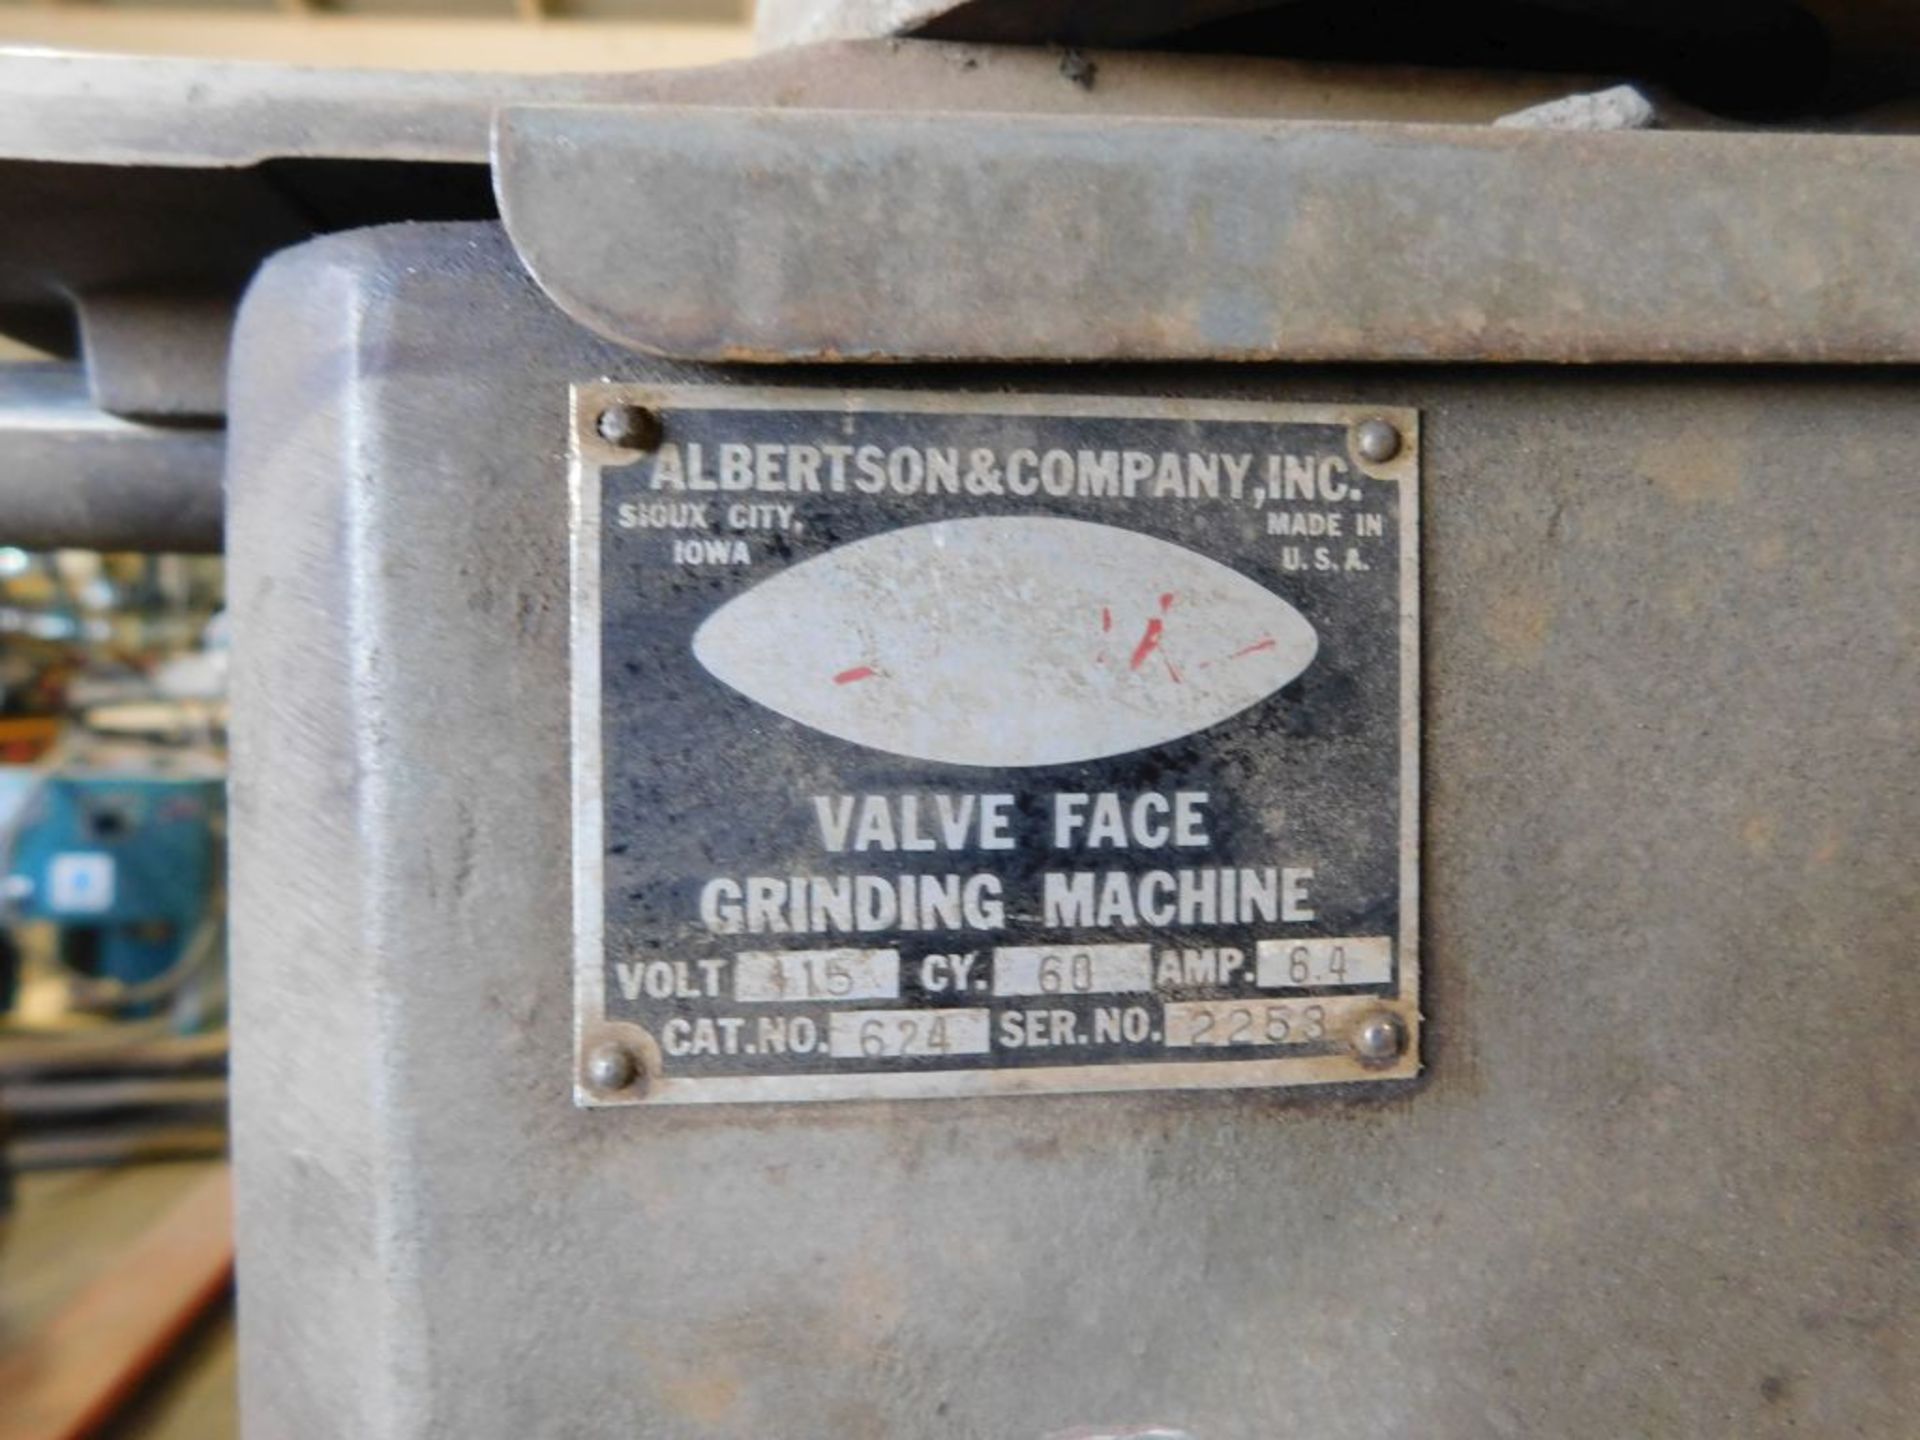 Sioux valve face grinding machine, model 645L, 115 volt. - Image 3 of 3